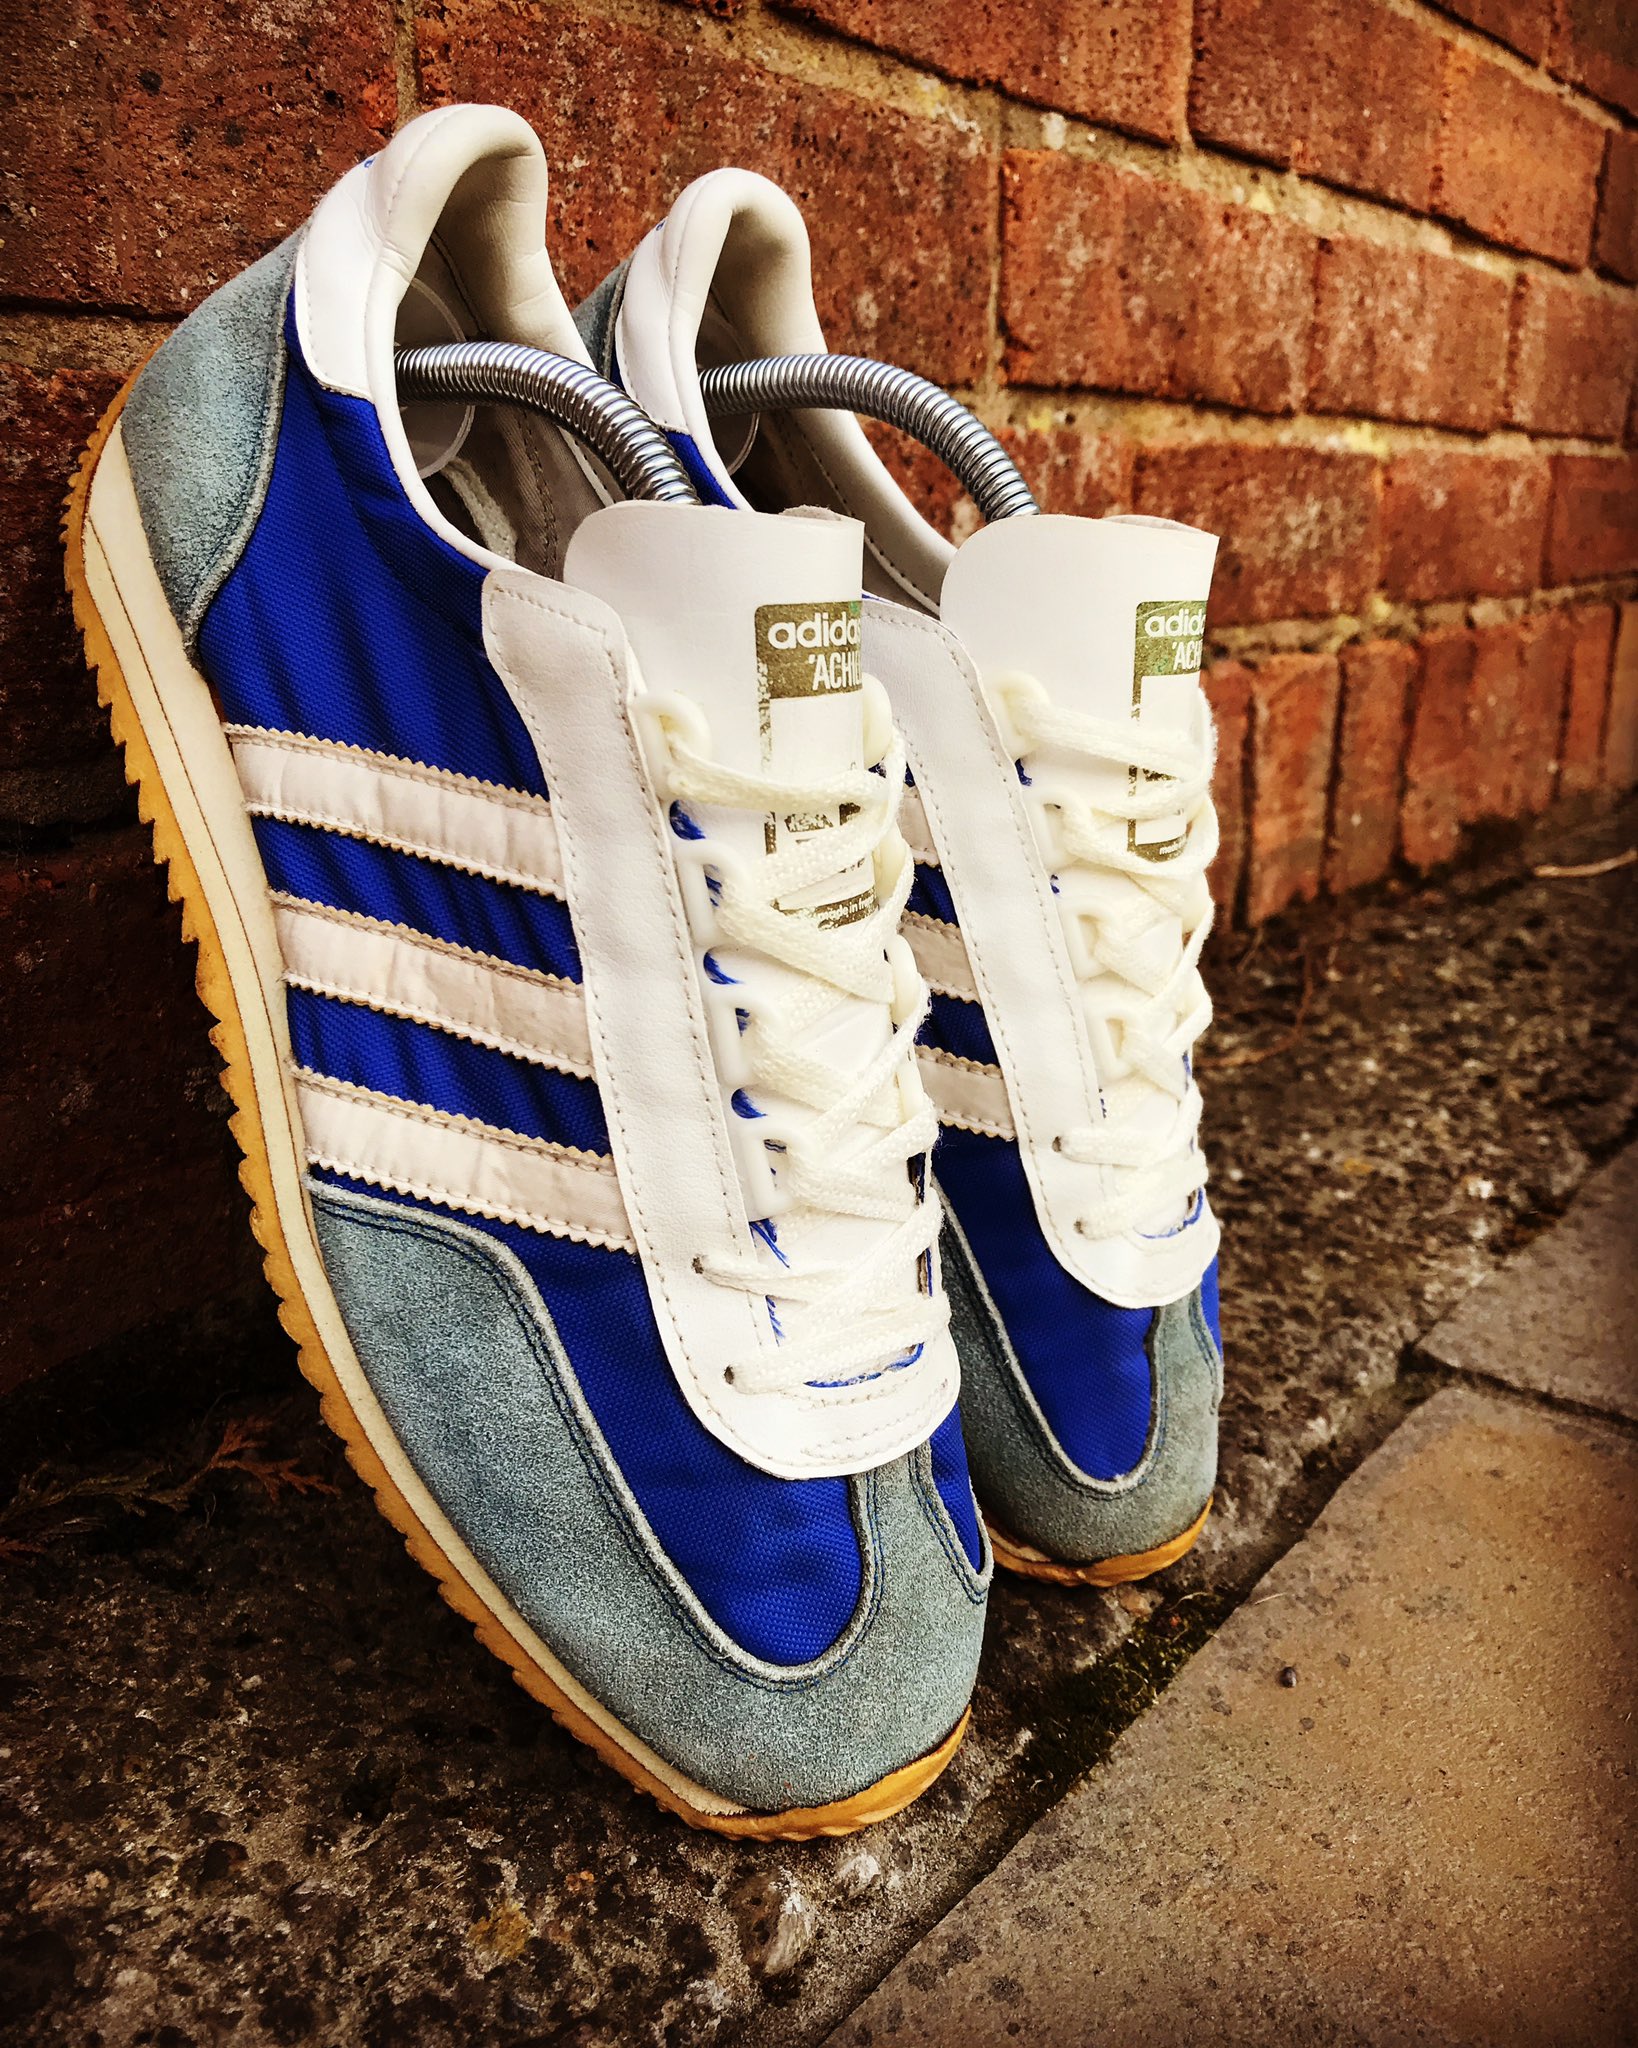 | Cultura Del Terrazzo on Twitter: "1981-82 Adidas Achille 🇫🇷 Really regret these go. #Adidas #Originals #Achille / Twitter